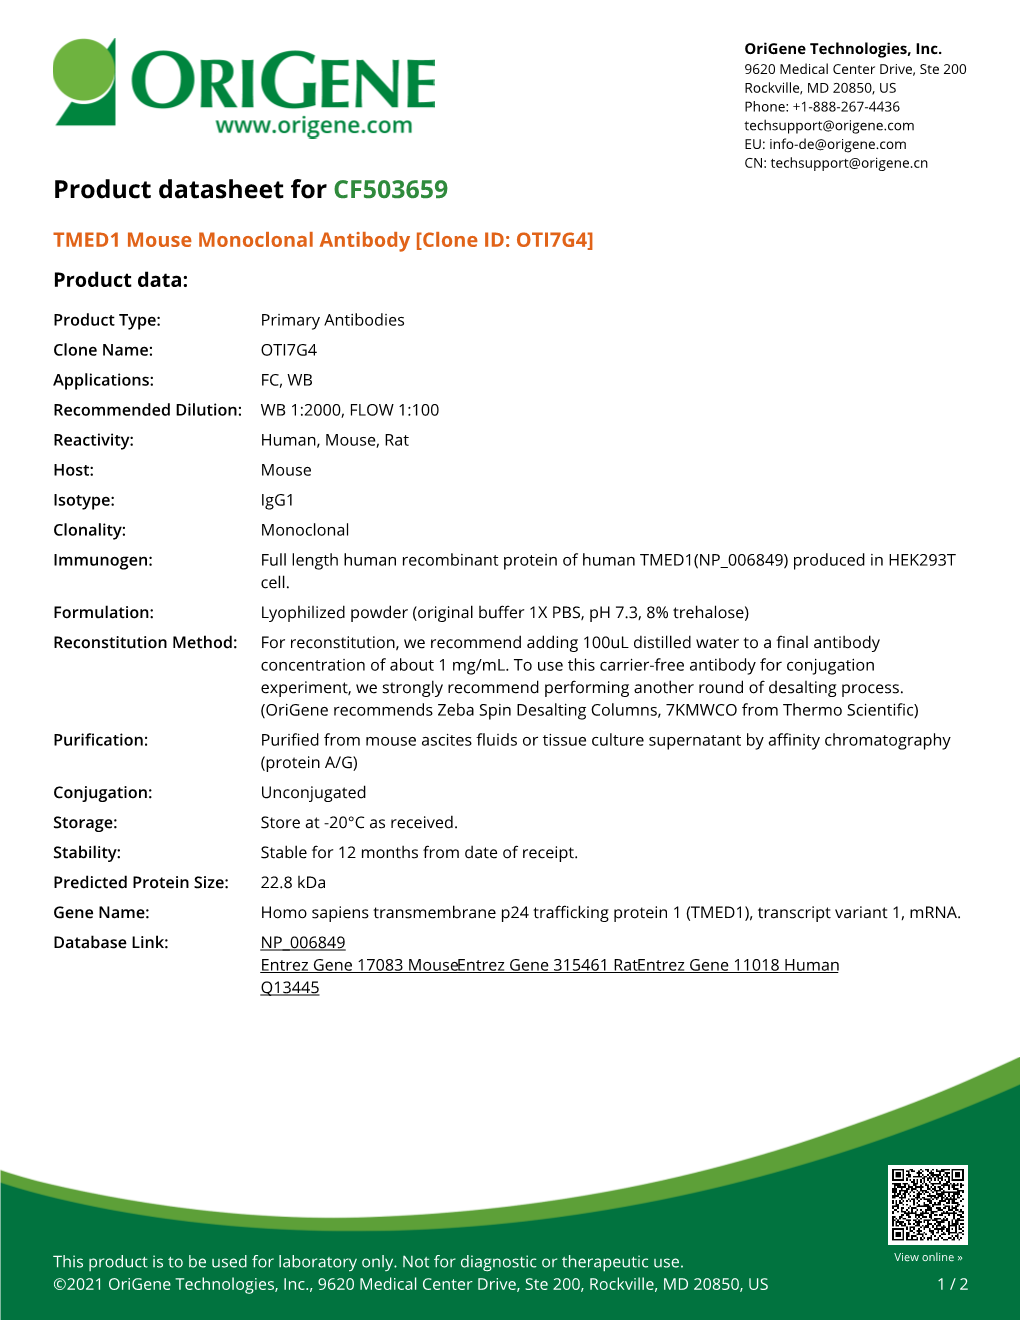 TMED1 Mouse Monoclonal Antibody [Clone ID: OTI7G4] Product Data